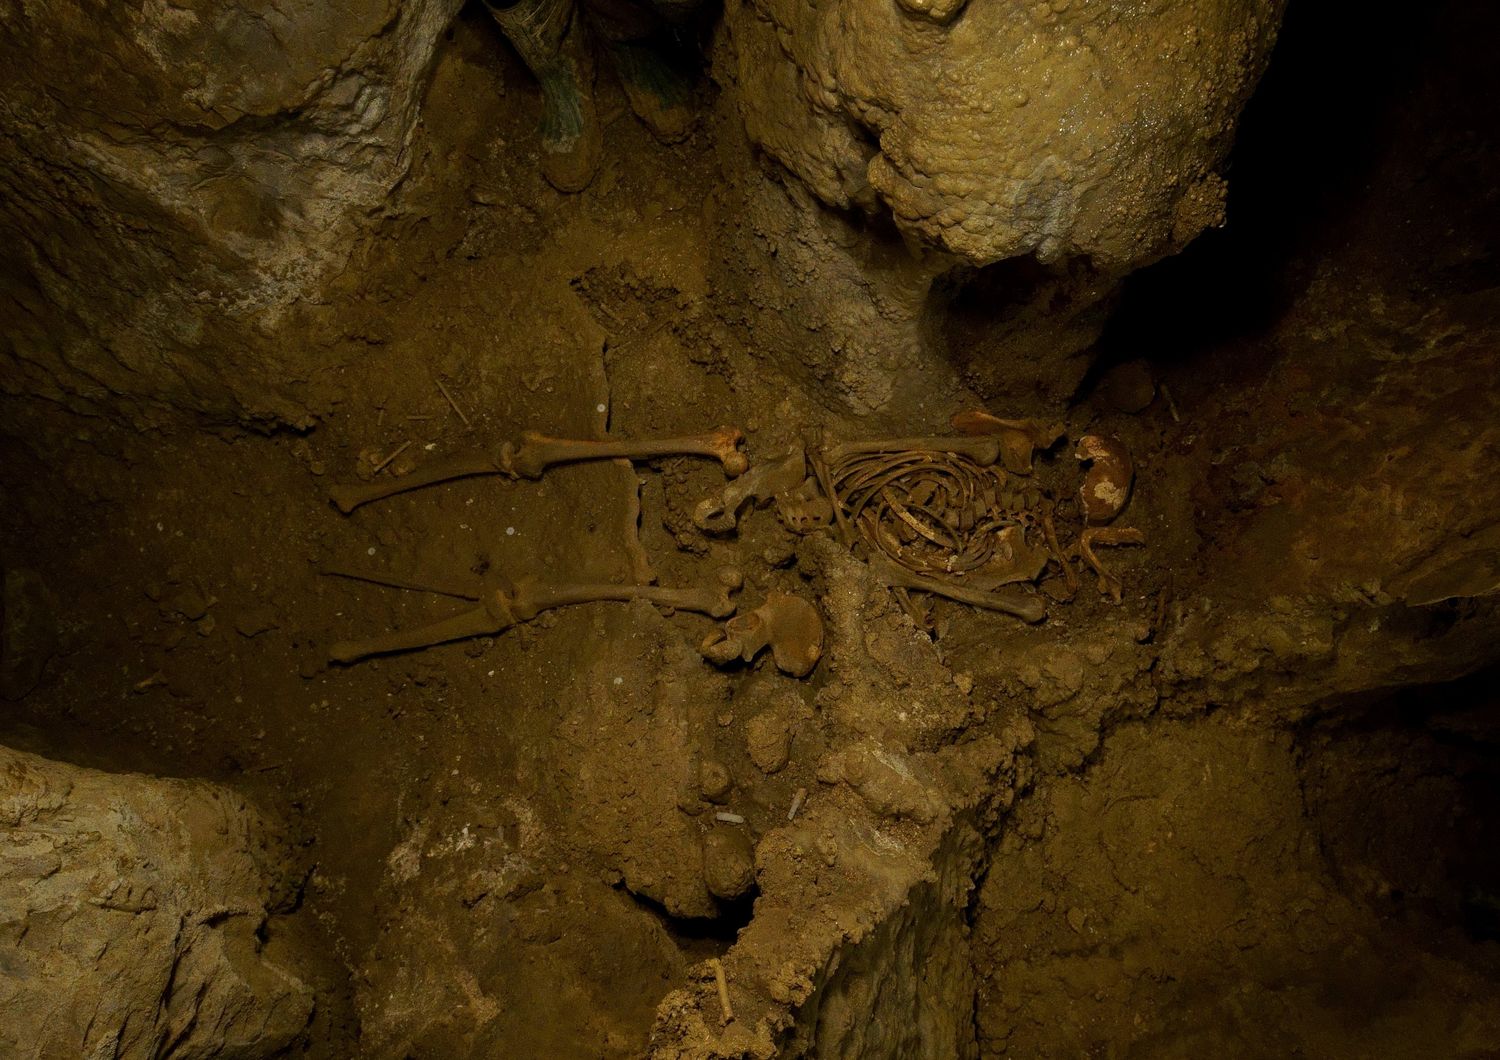 spagna recupero scheletro 11.700 anni fa&nbsp;loizu